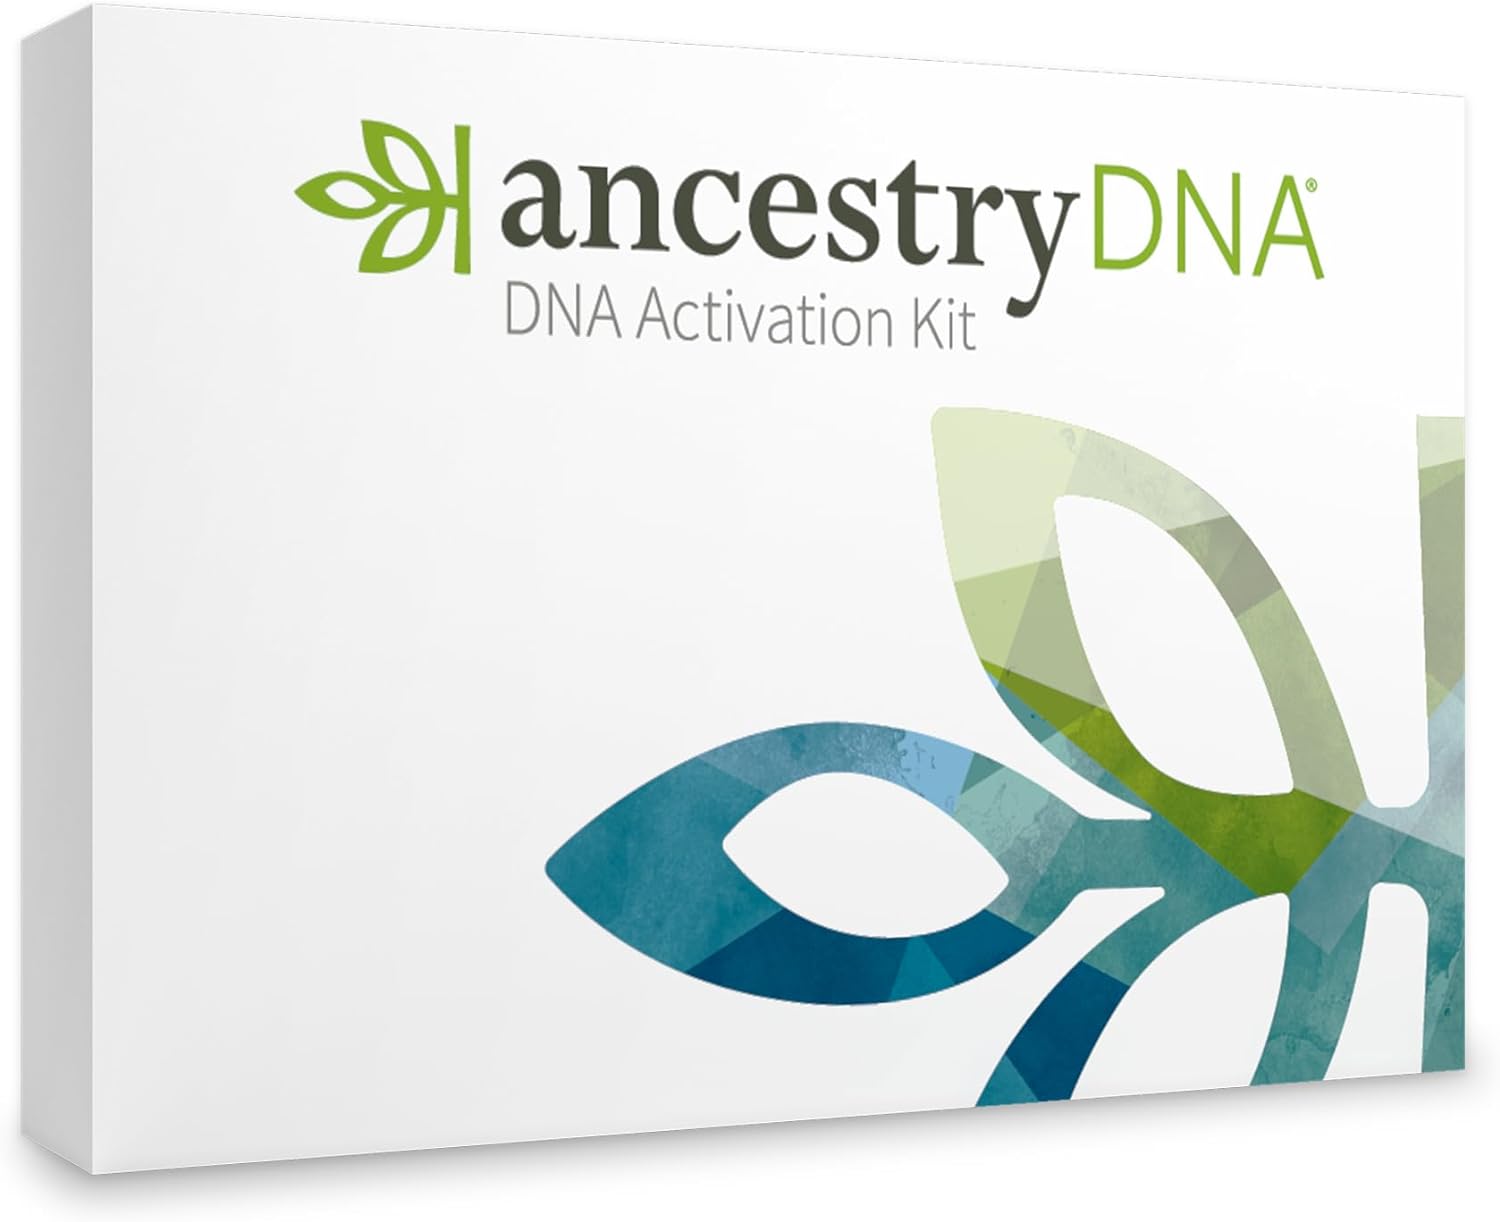 Ancestry DNA test kit 60 off Amazon - $39